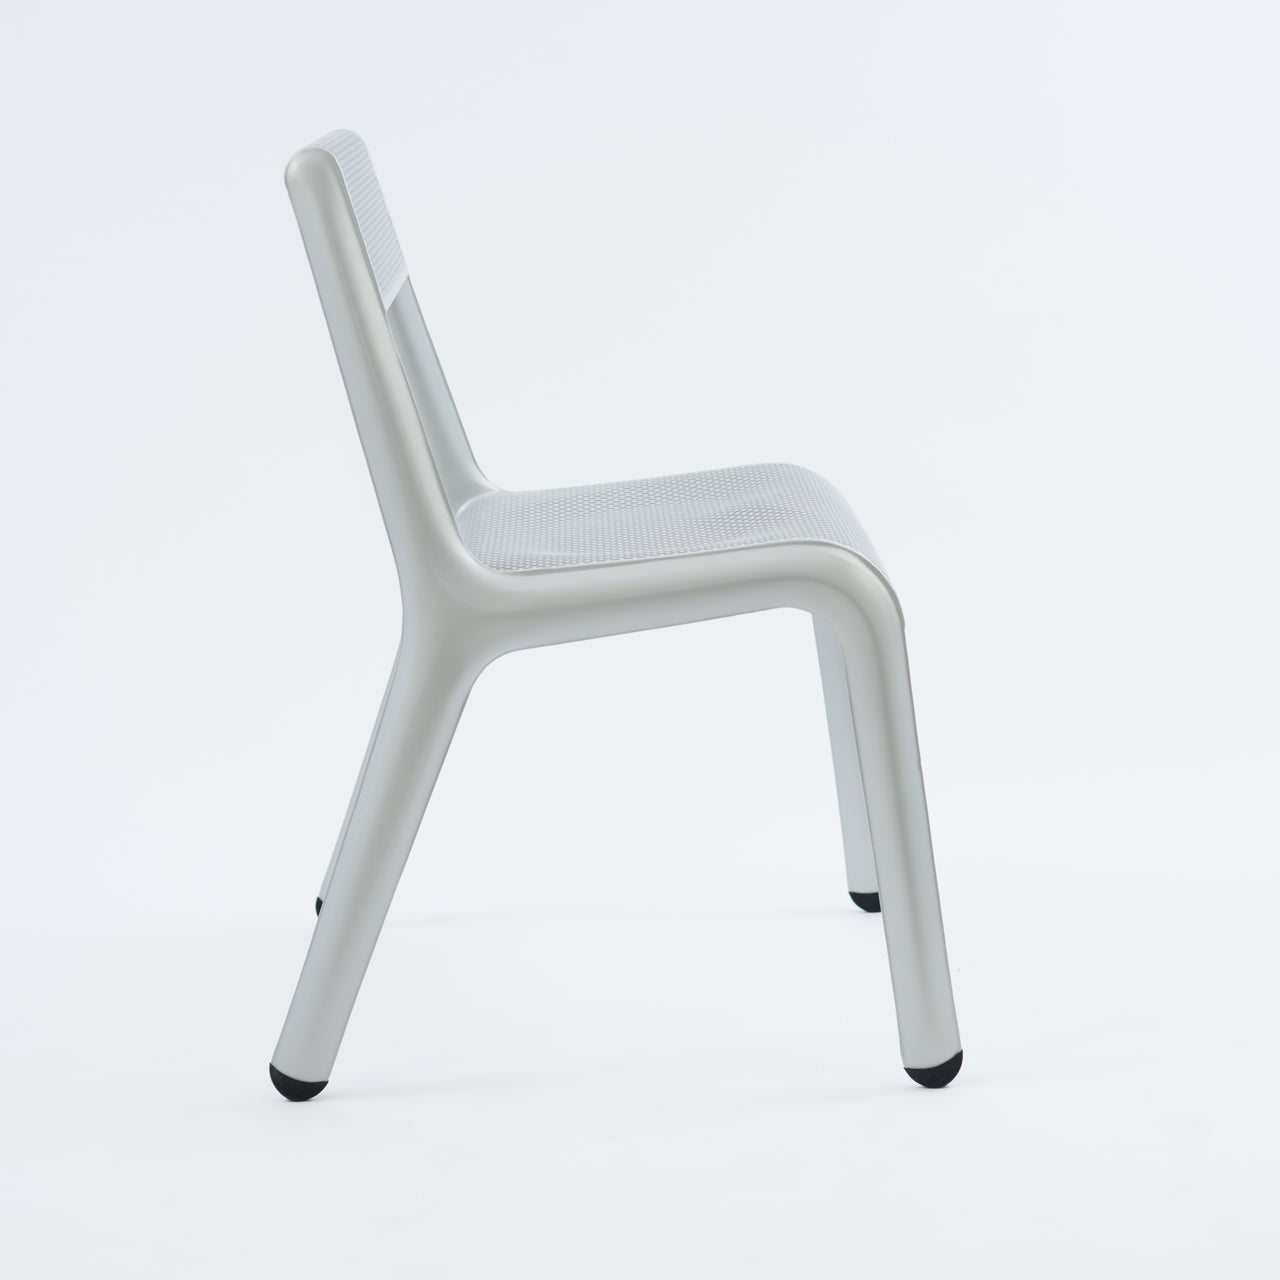 Ultraleggera Chair